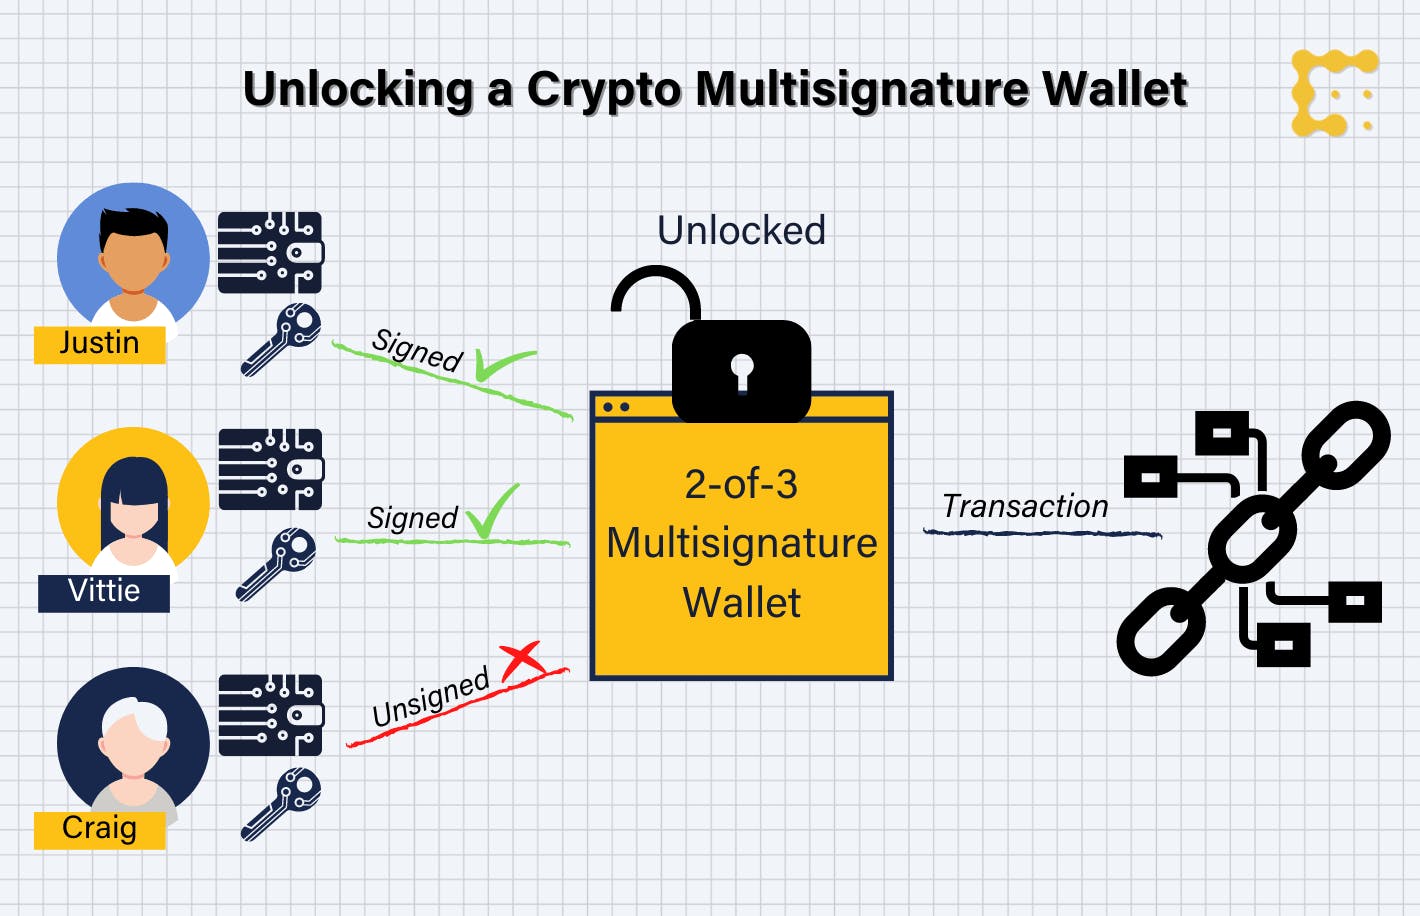 Multisignature Wallets